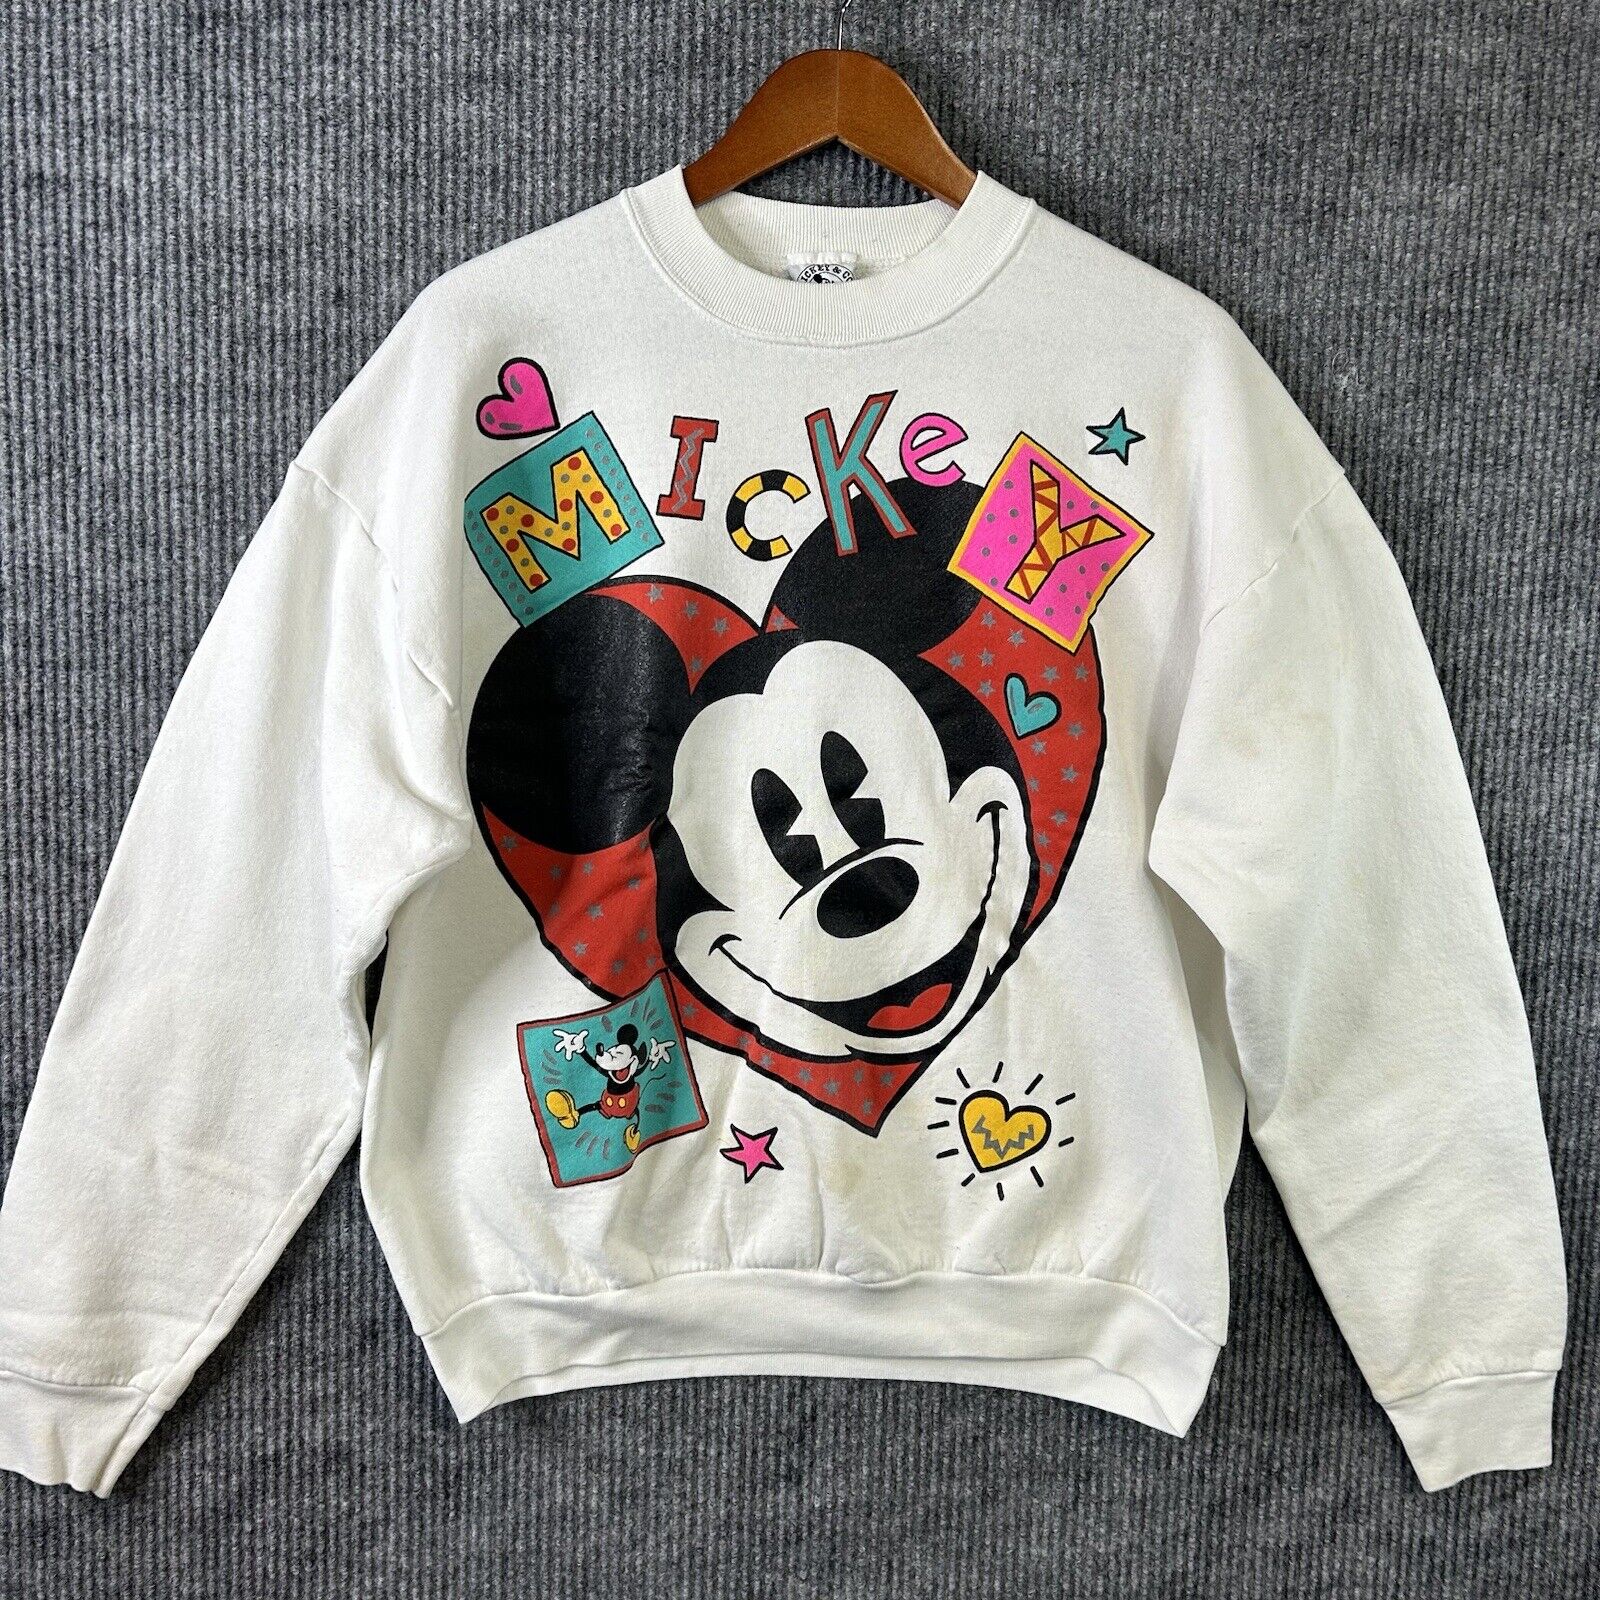 Vintage 80’s Disney Mickey Mouse Sweatshirt Adult Large White